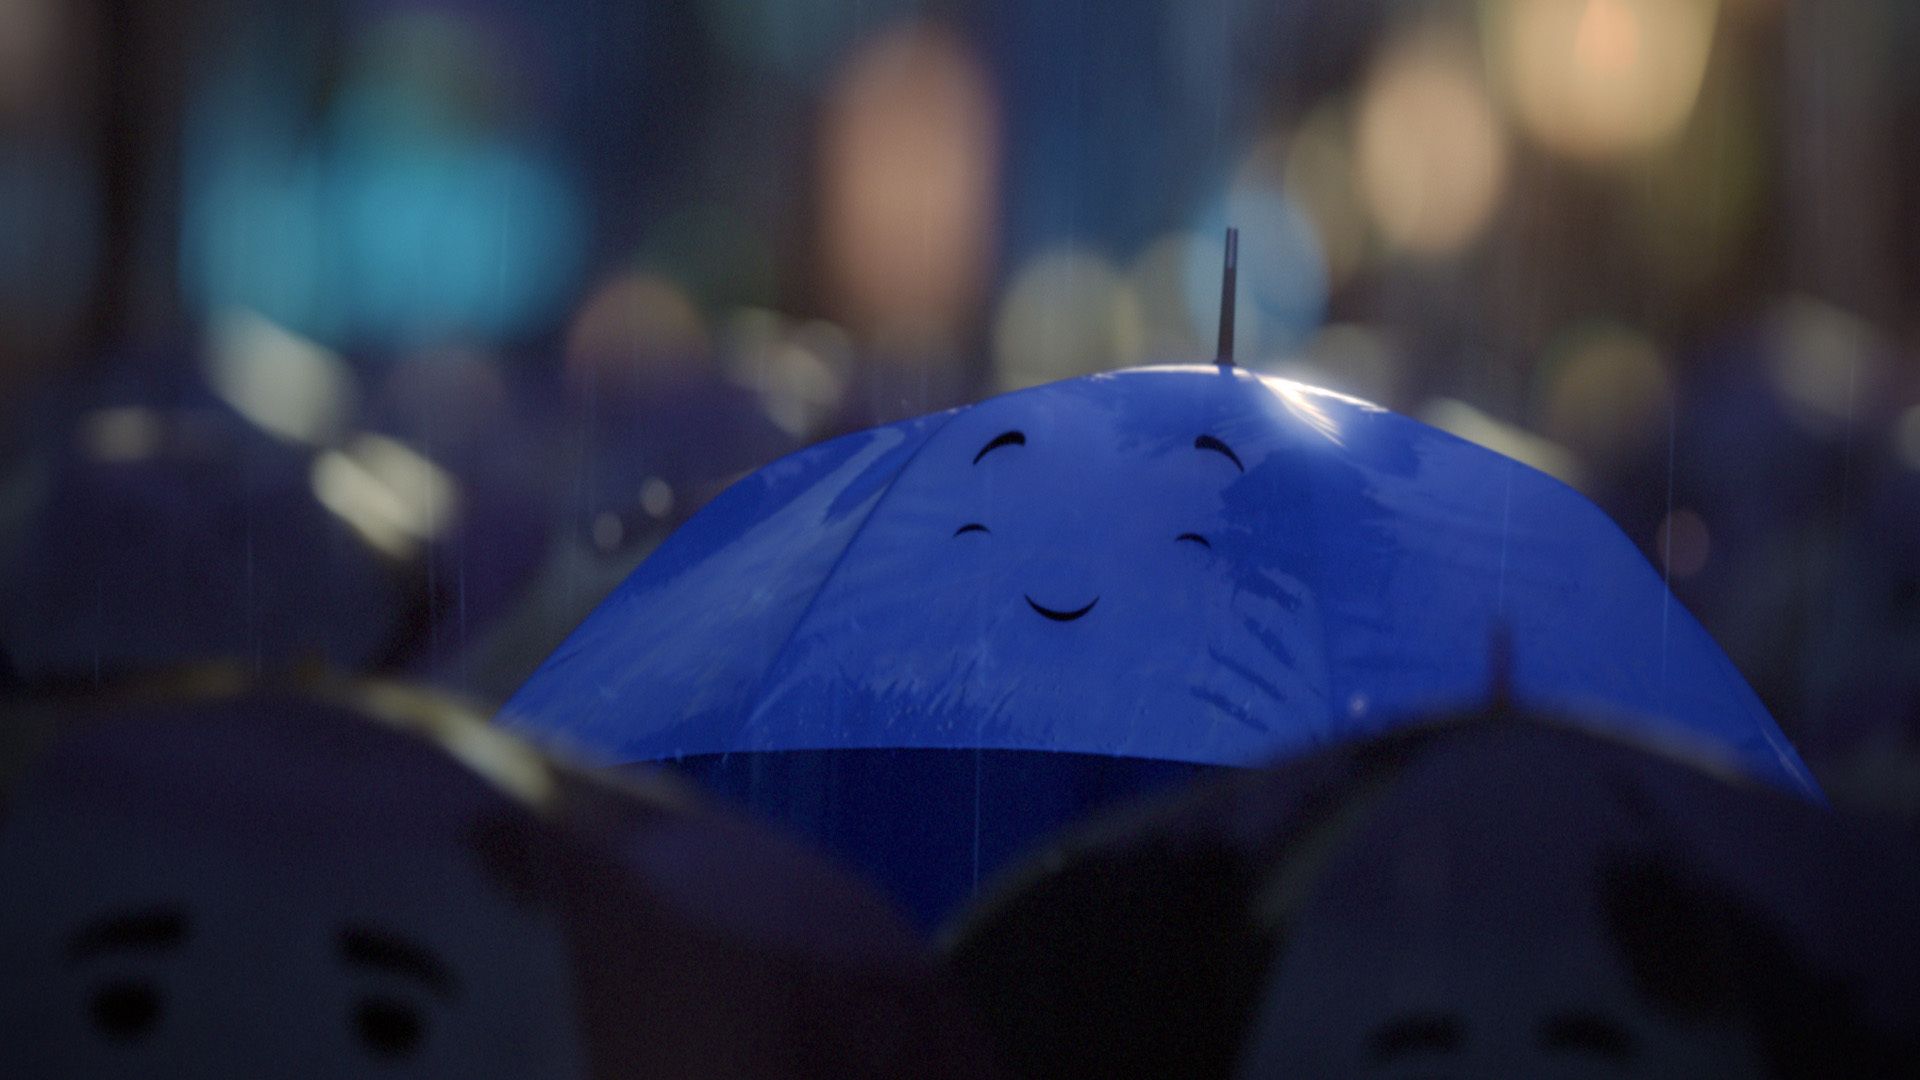 The Blue Umbrella background